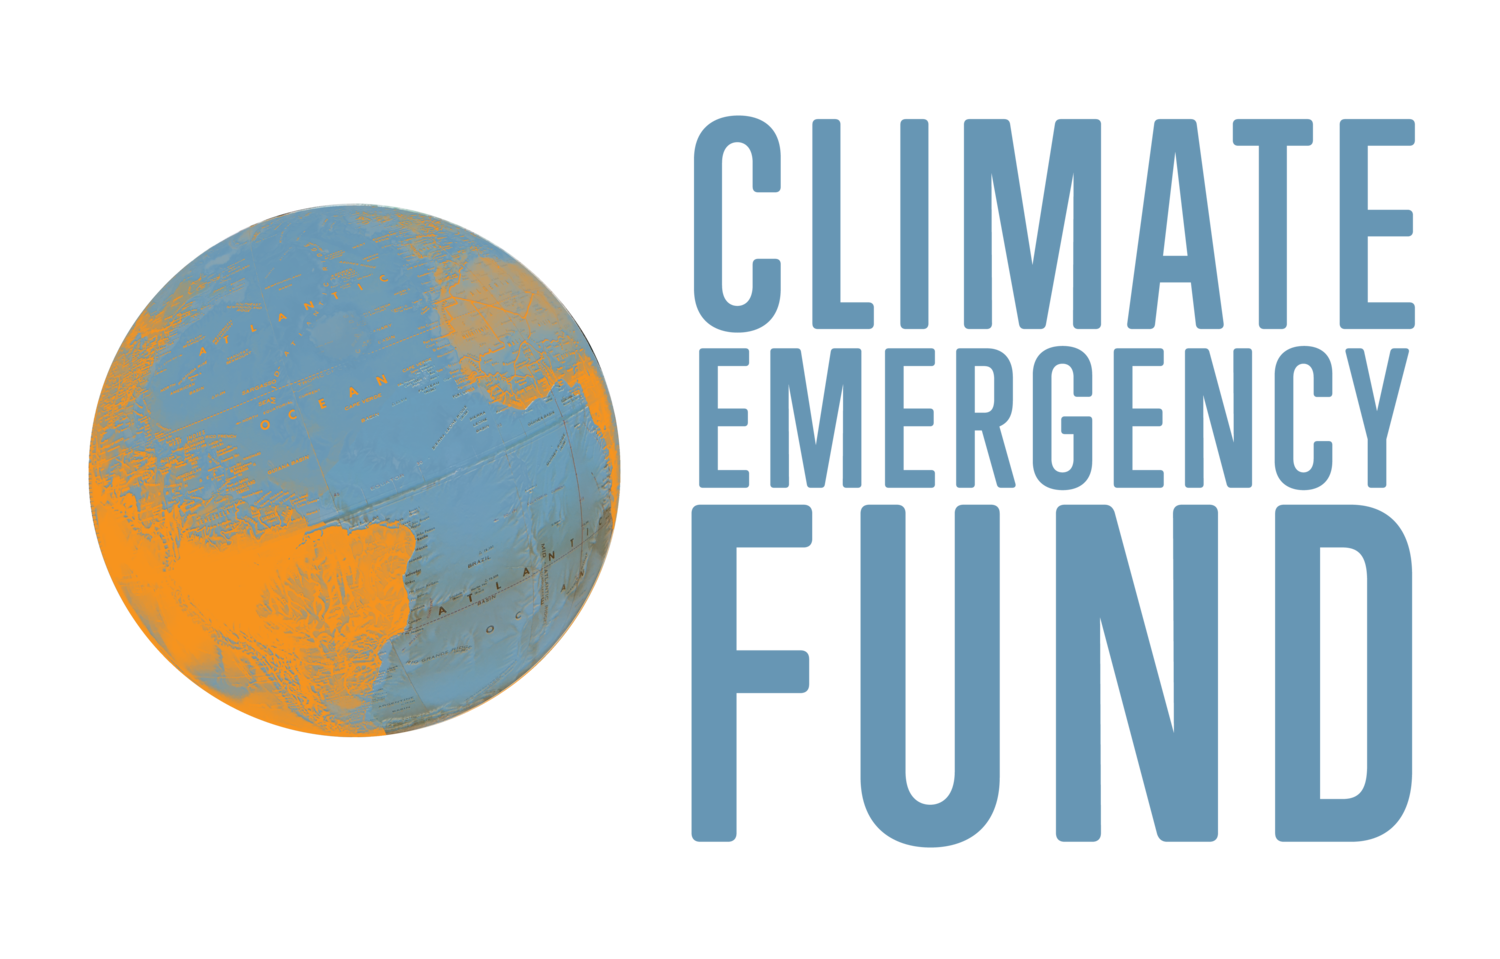 Climate Emergency Fund